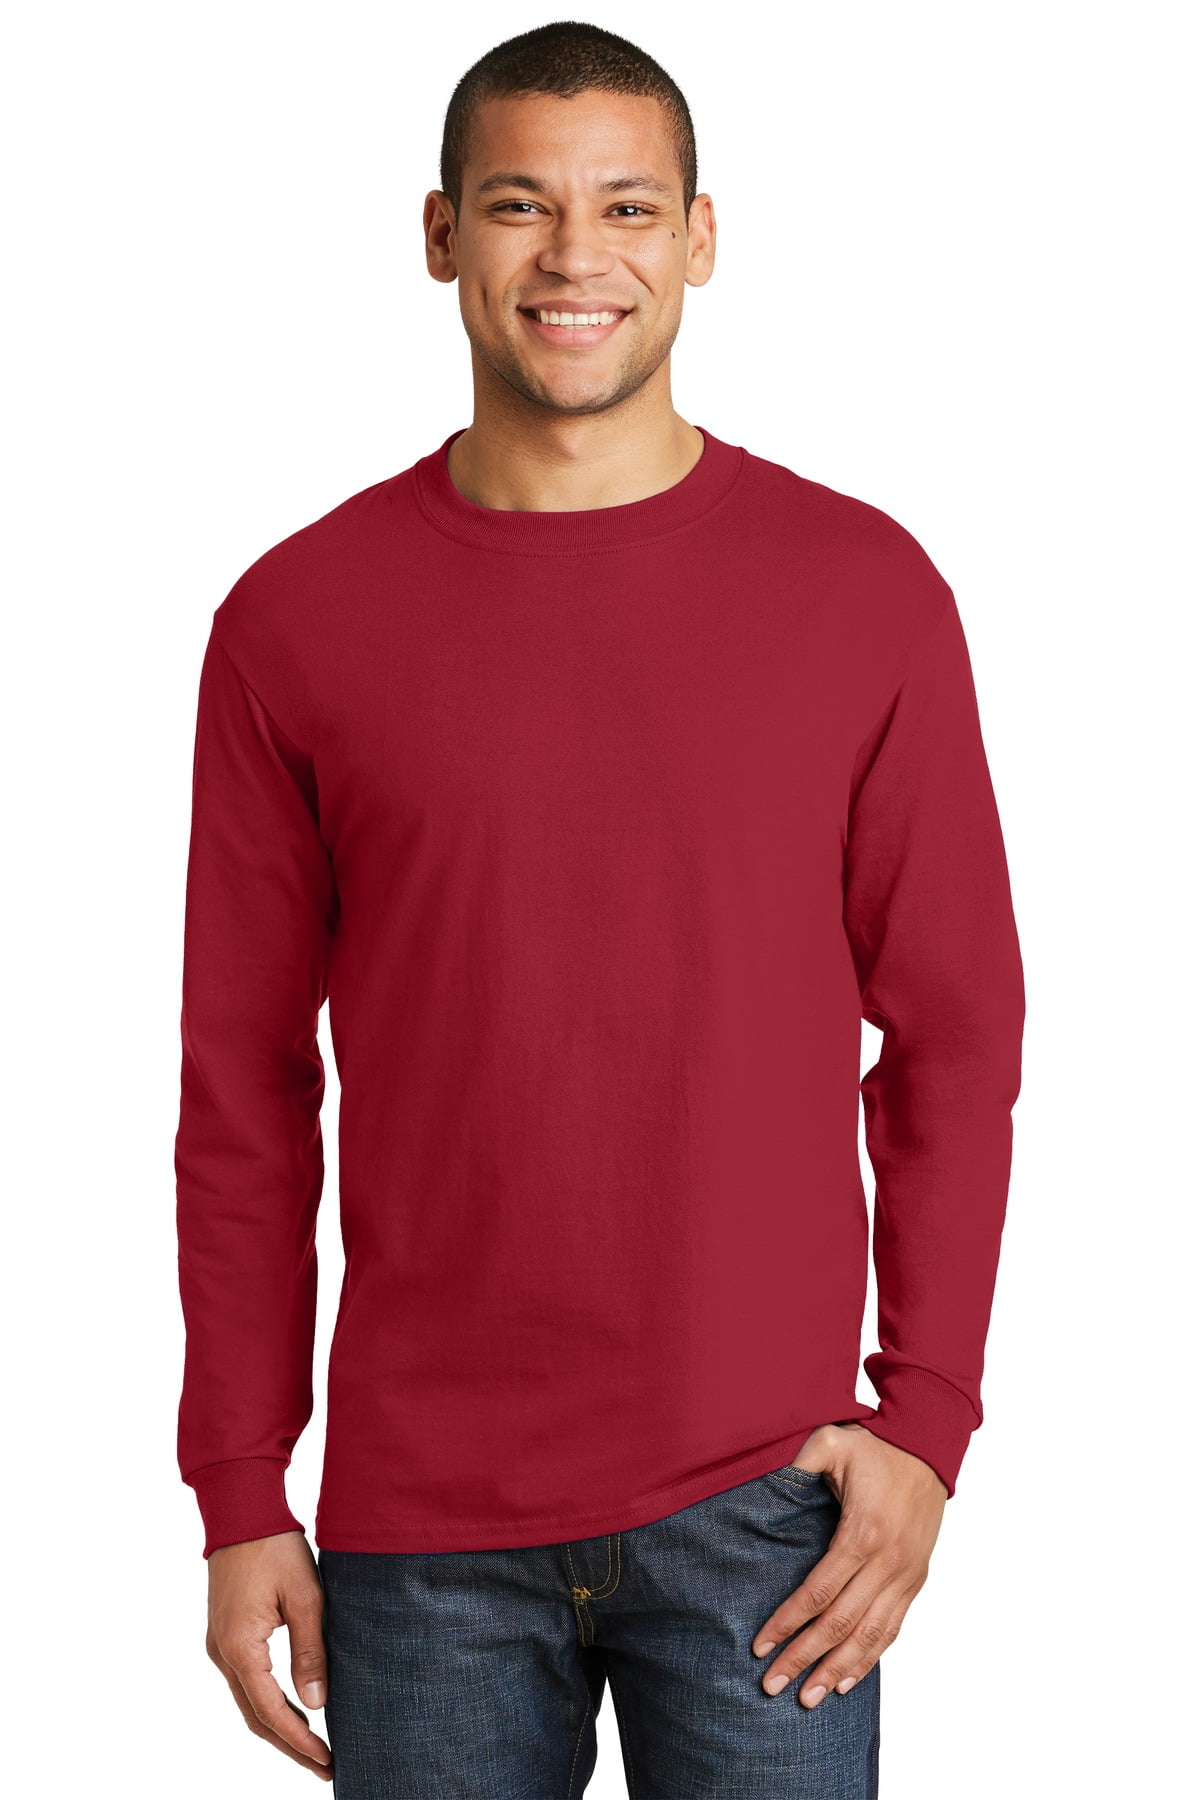 Hanes Beefy-T 100% Cotton Long Sleeve T-Shirt - Walmart.com